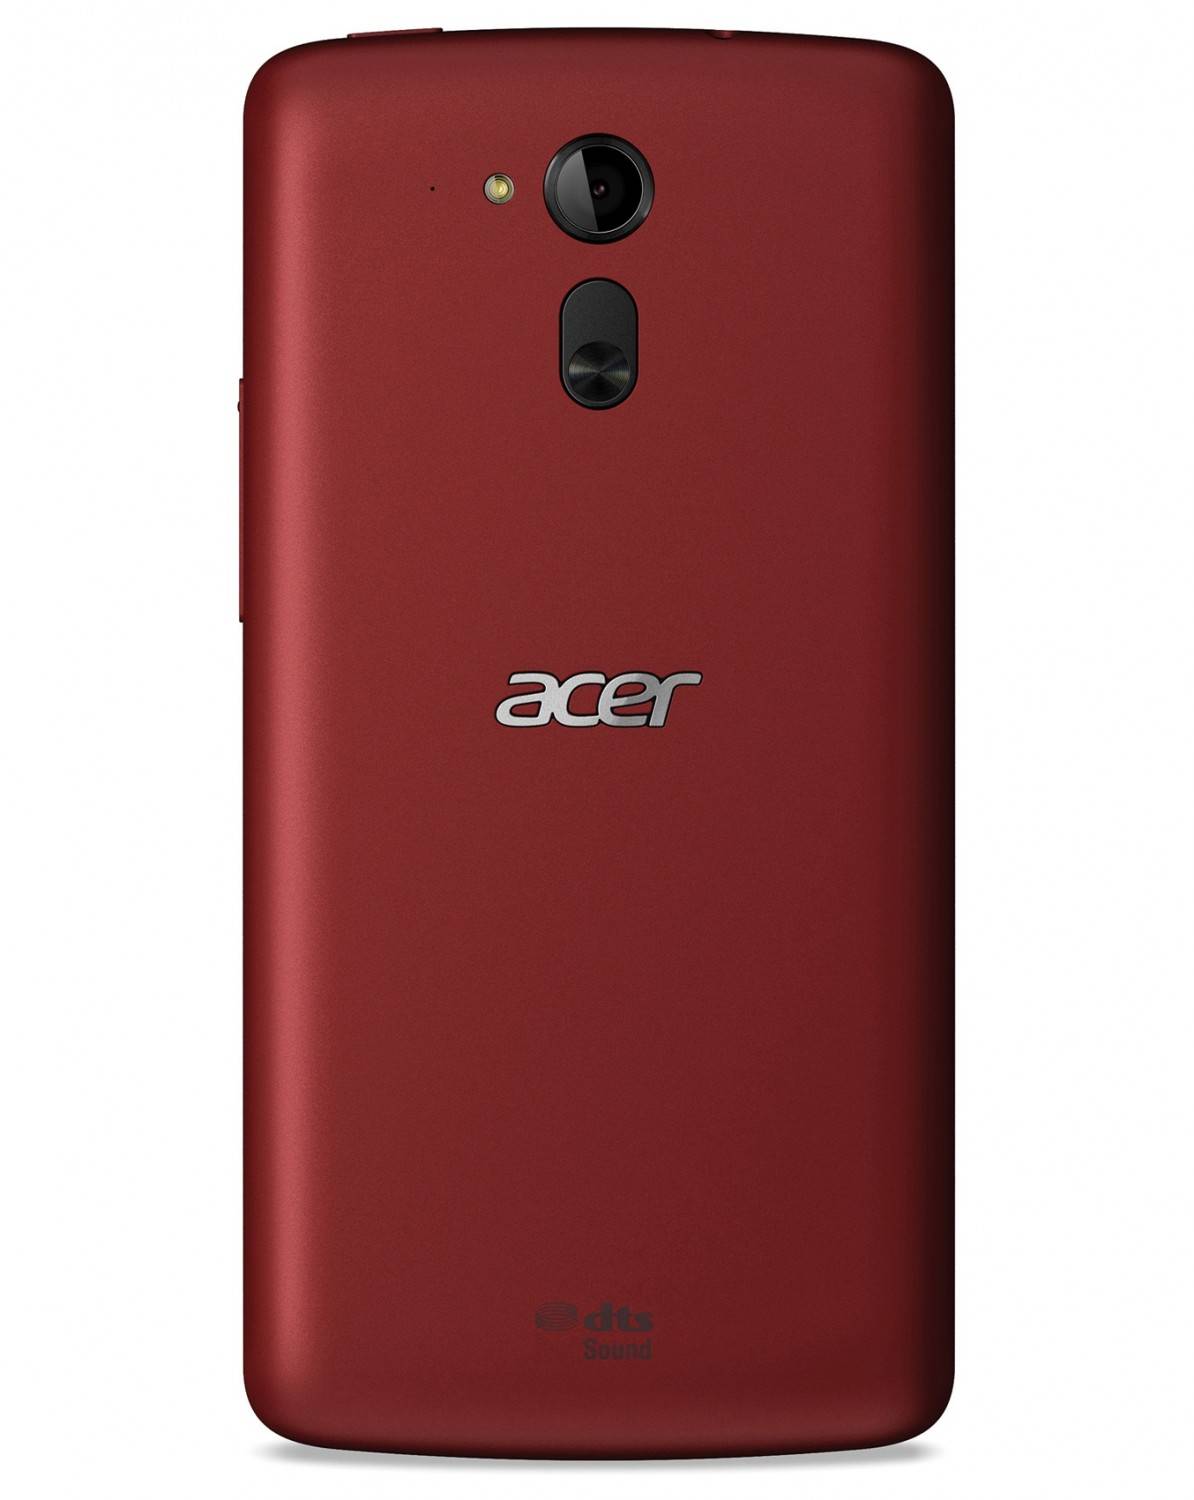 Smartphones Acer Liqiud E700 Trio im Test, Bild 2